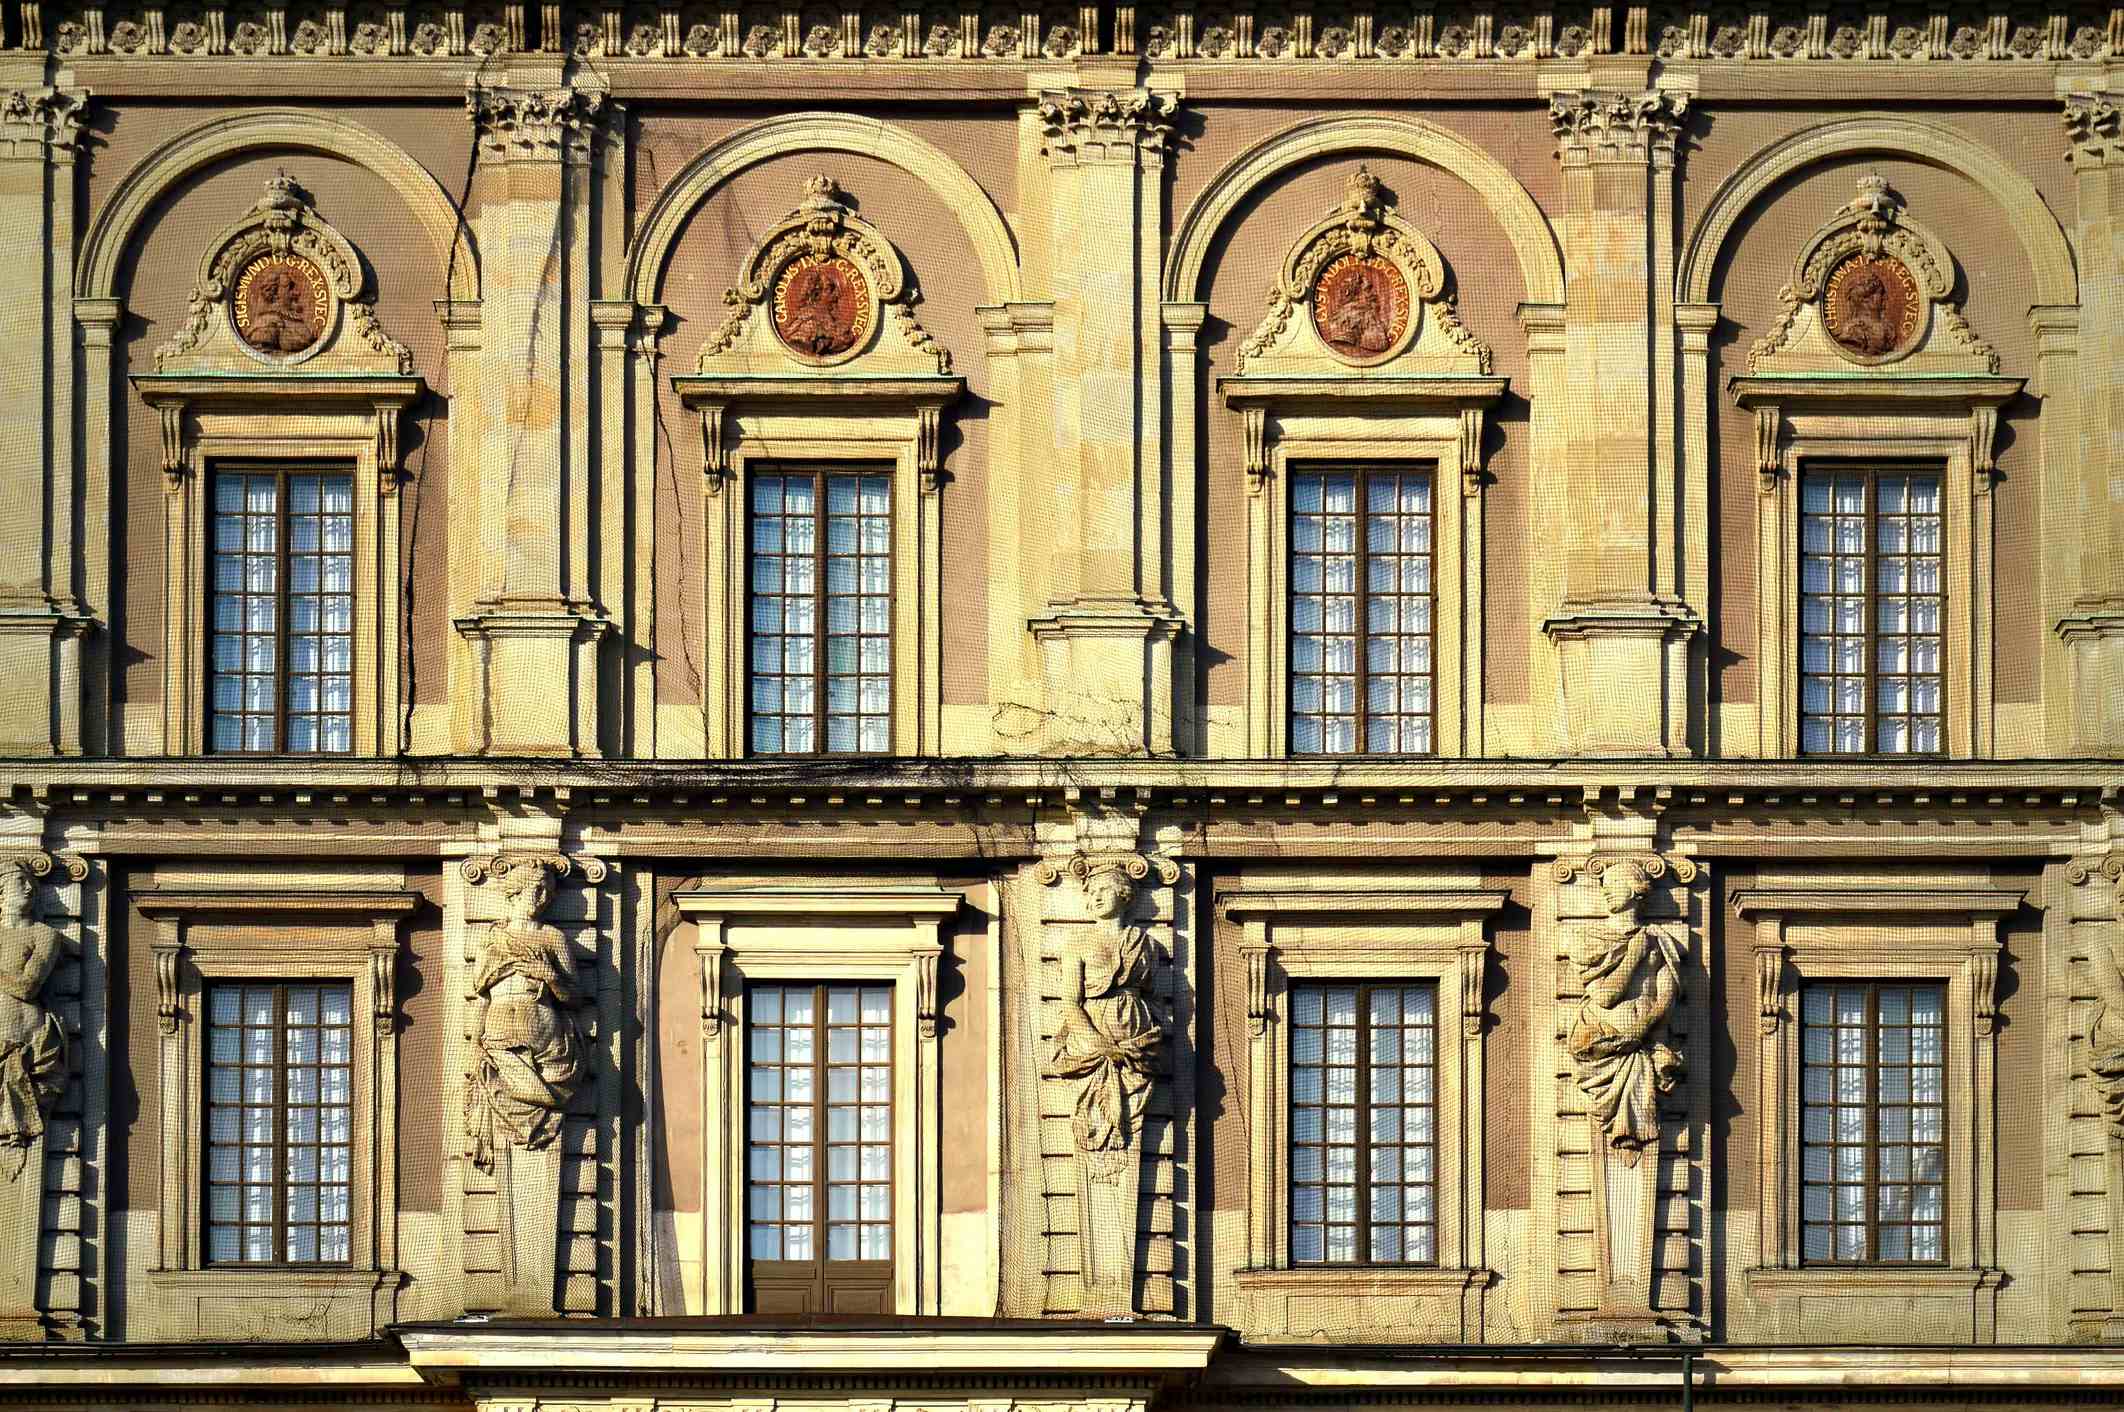 The Royal Palace image